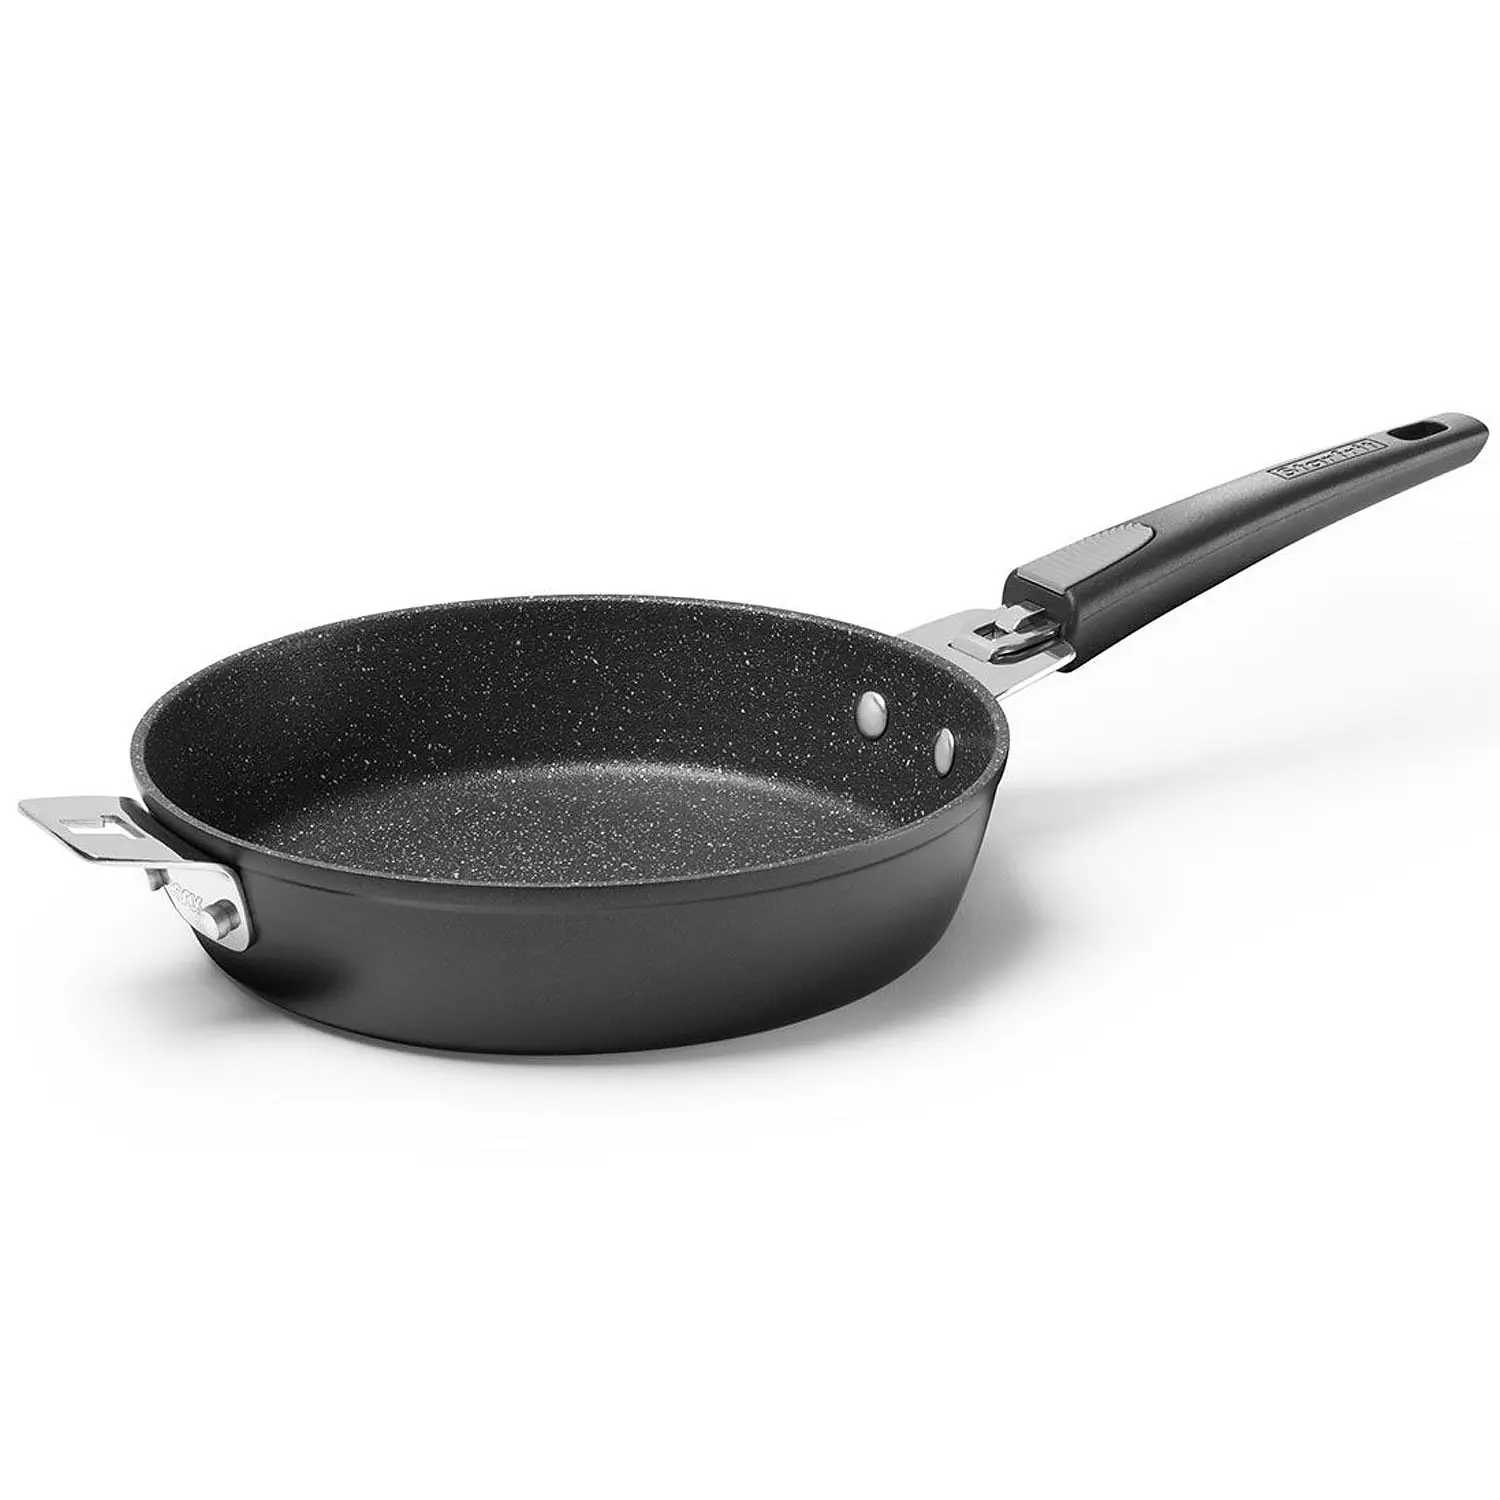 Starfrit - The Rock fry pan / cake pan with detachable handle, 9"